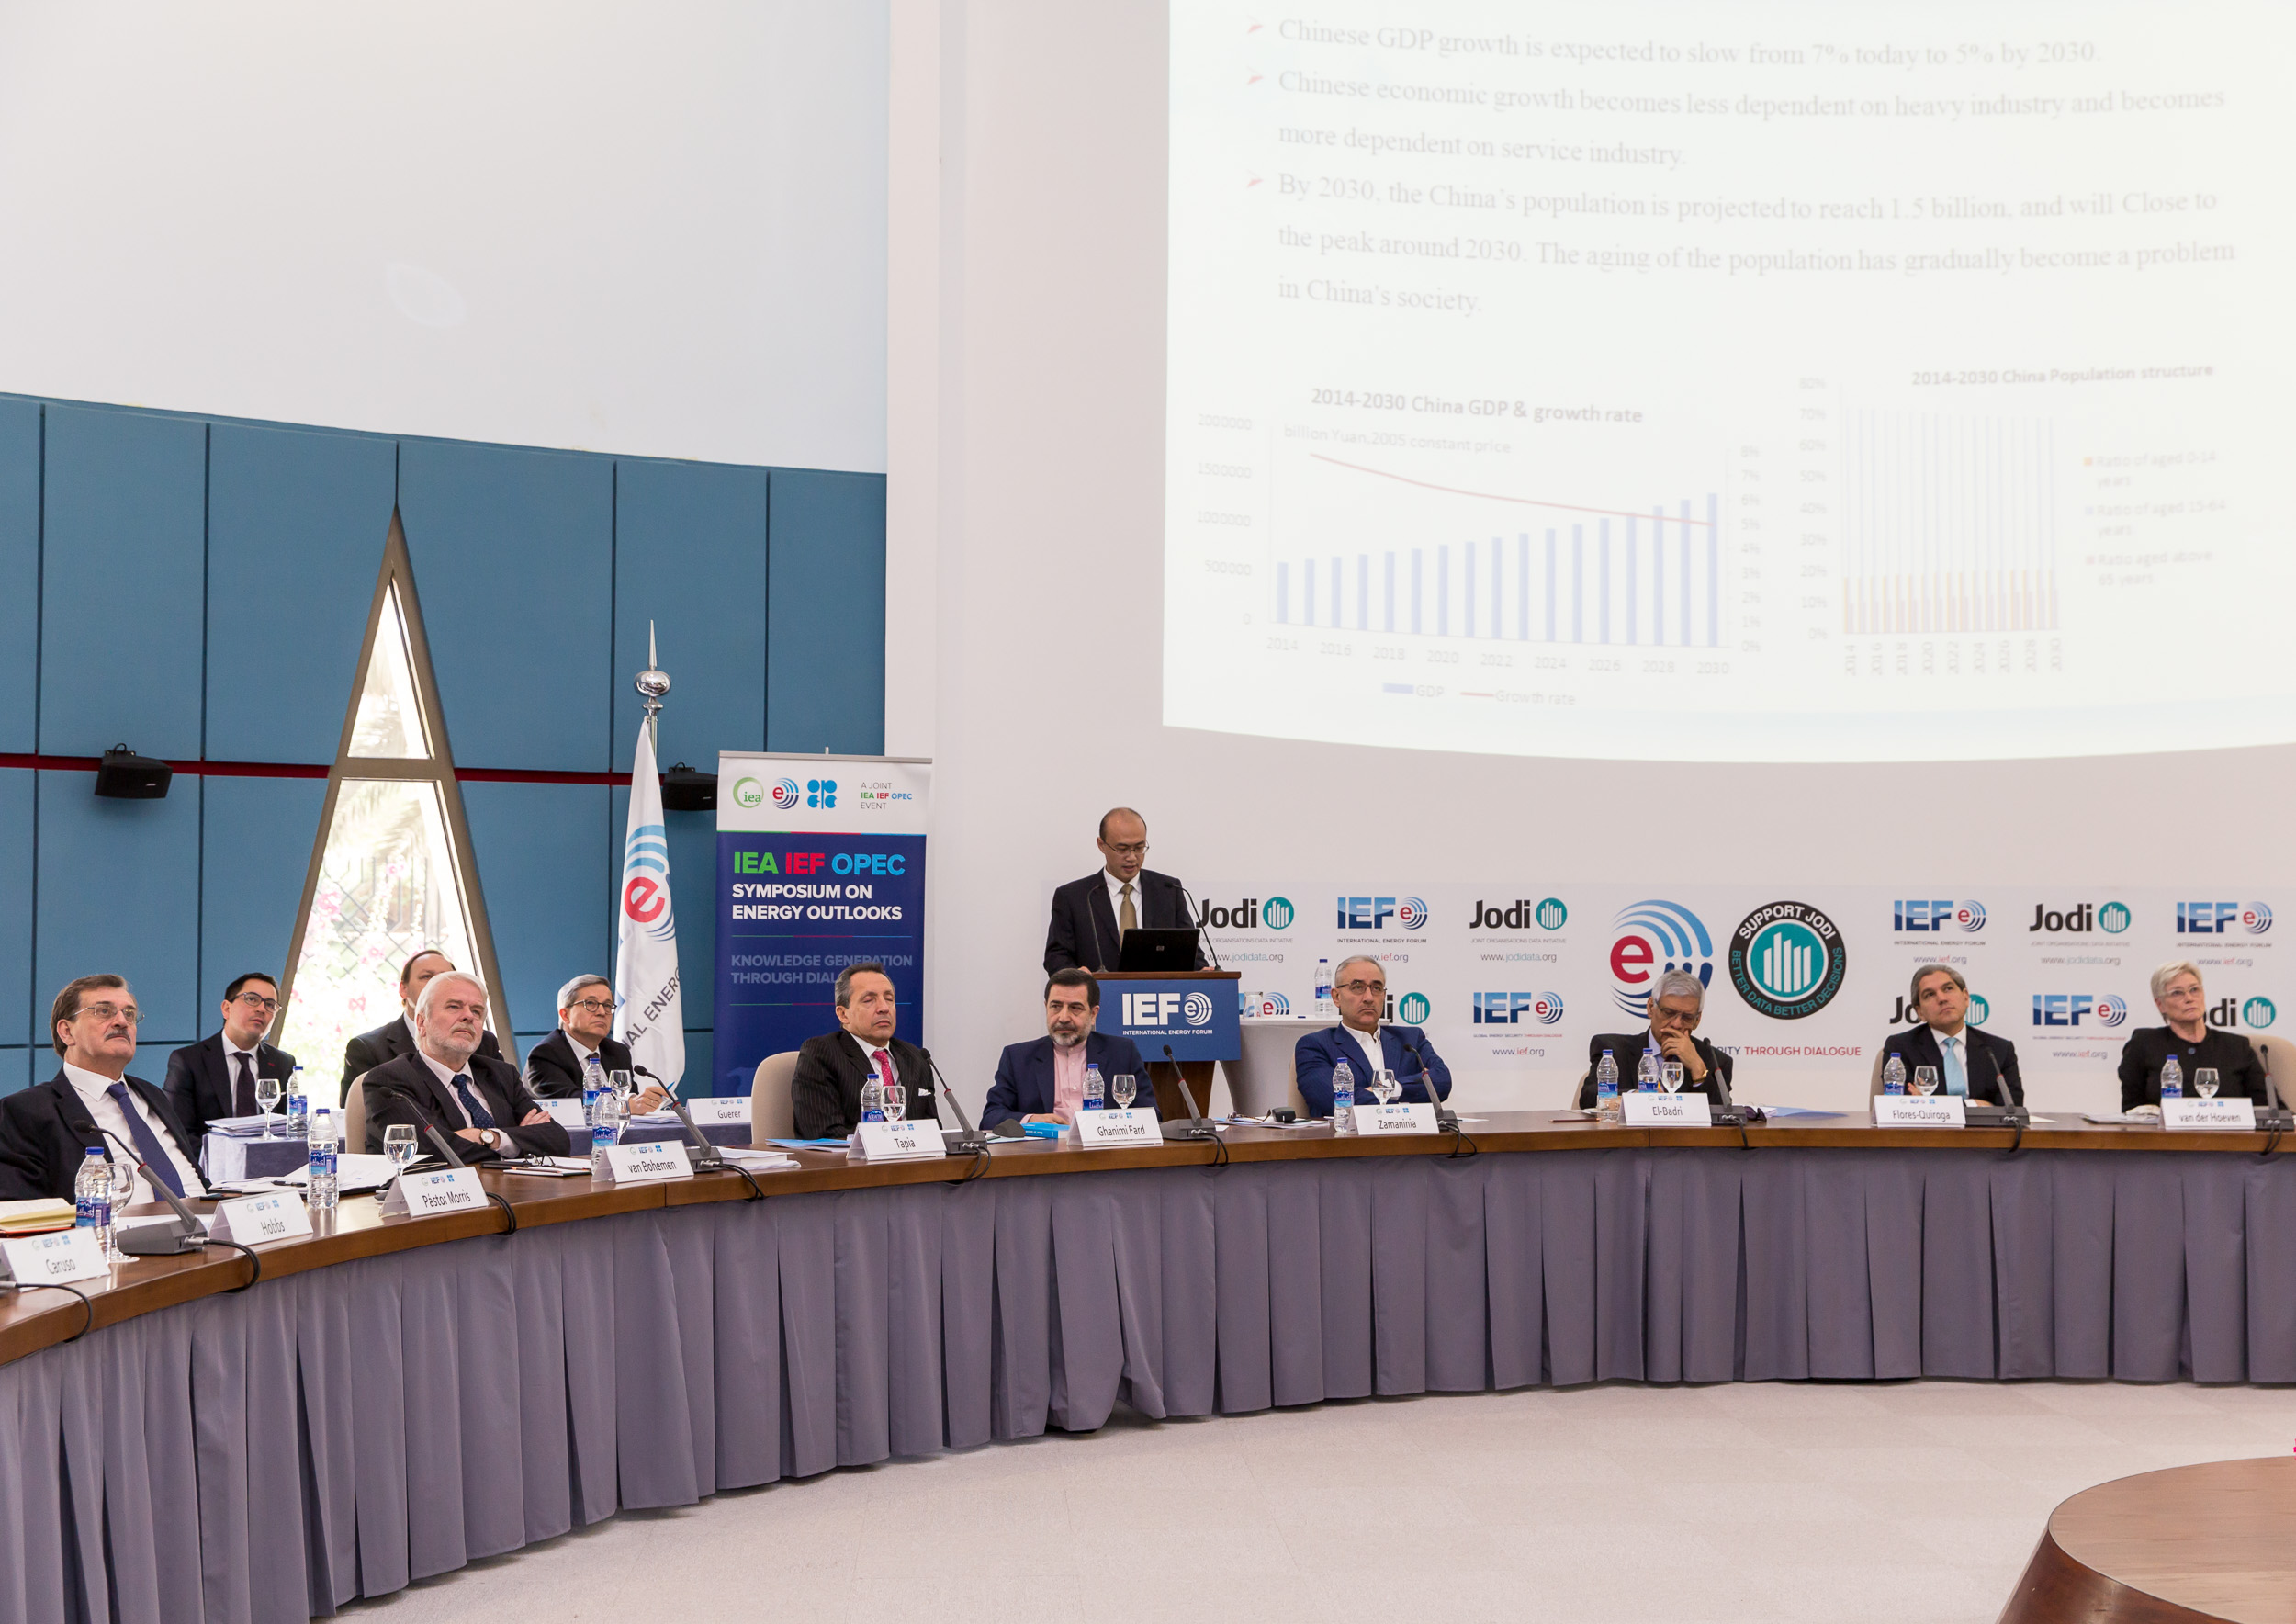 IEA IEF OPEC Symposium_21092